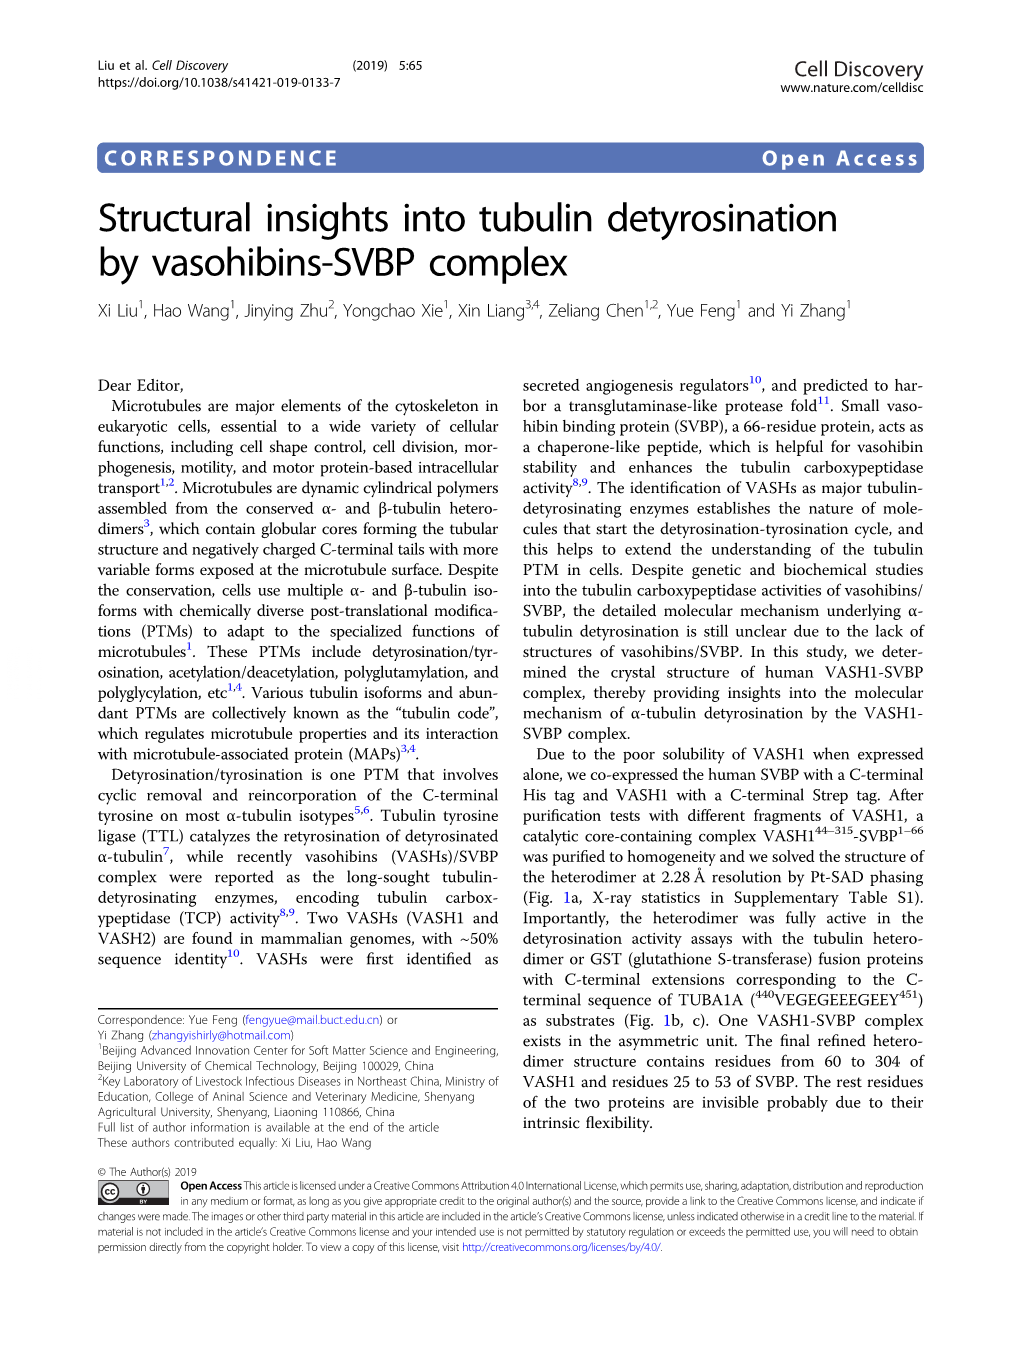 Structural Insights Into Tubulin Detyrosination by Vasohibins-SVBP